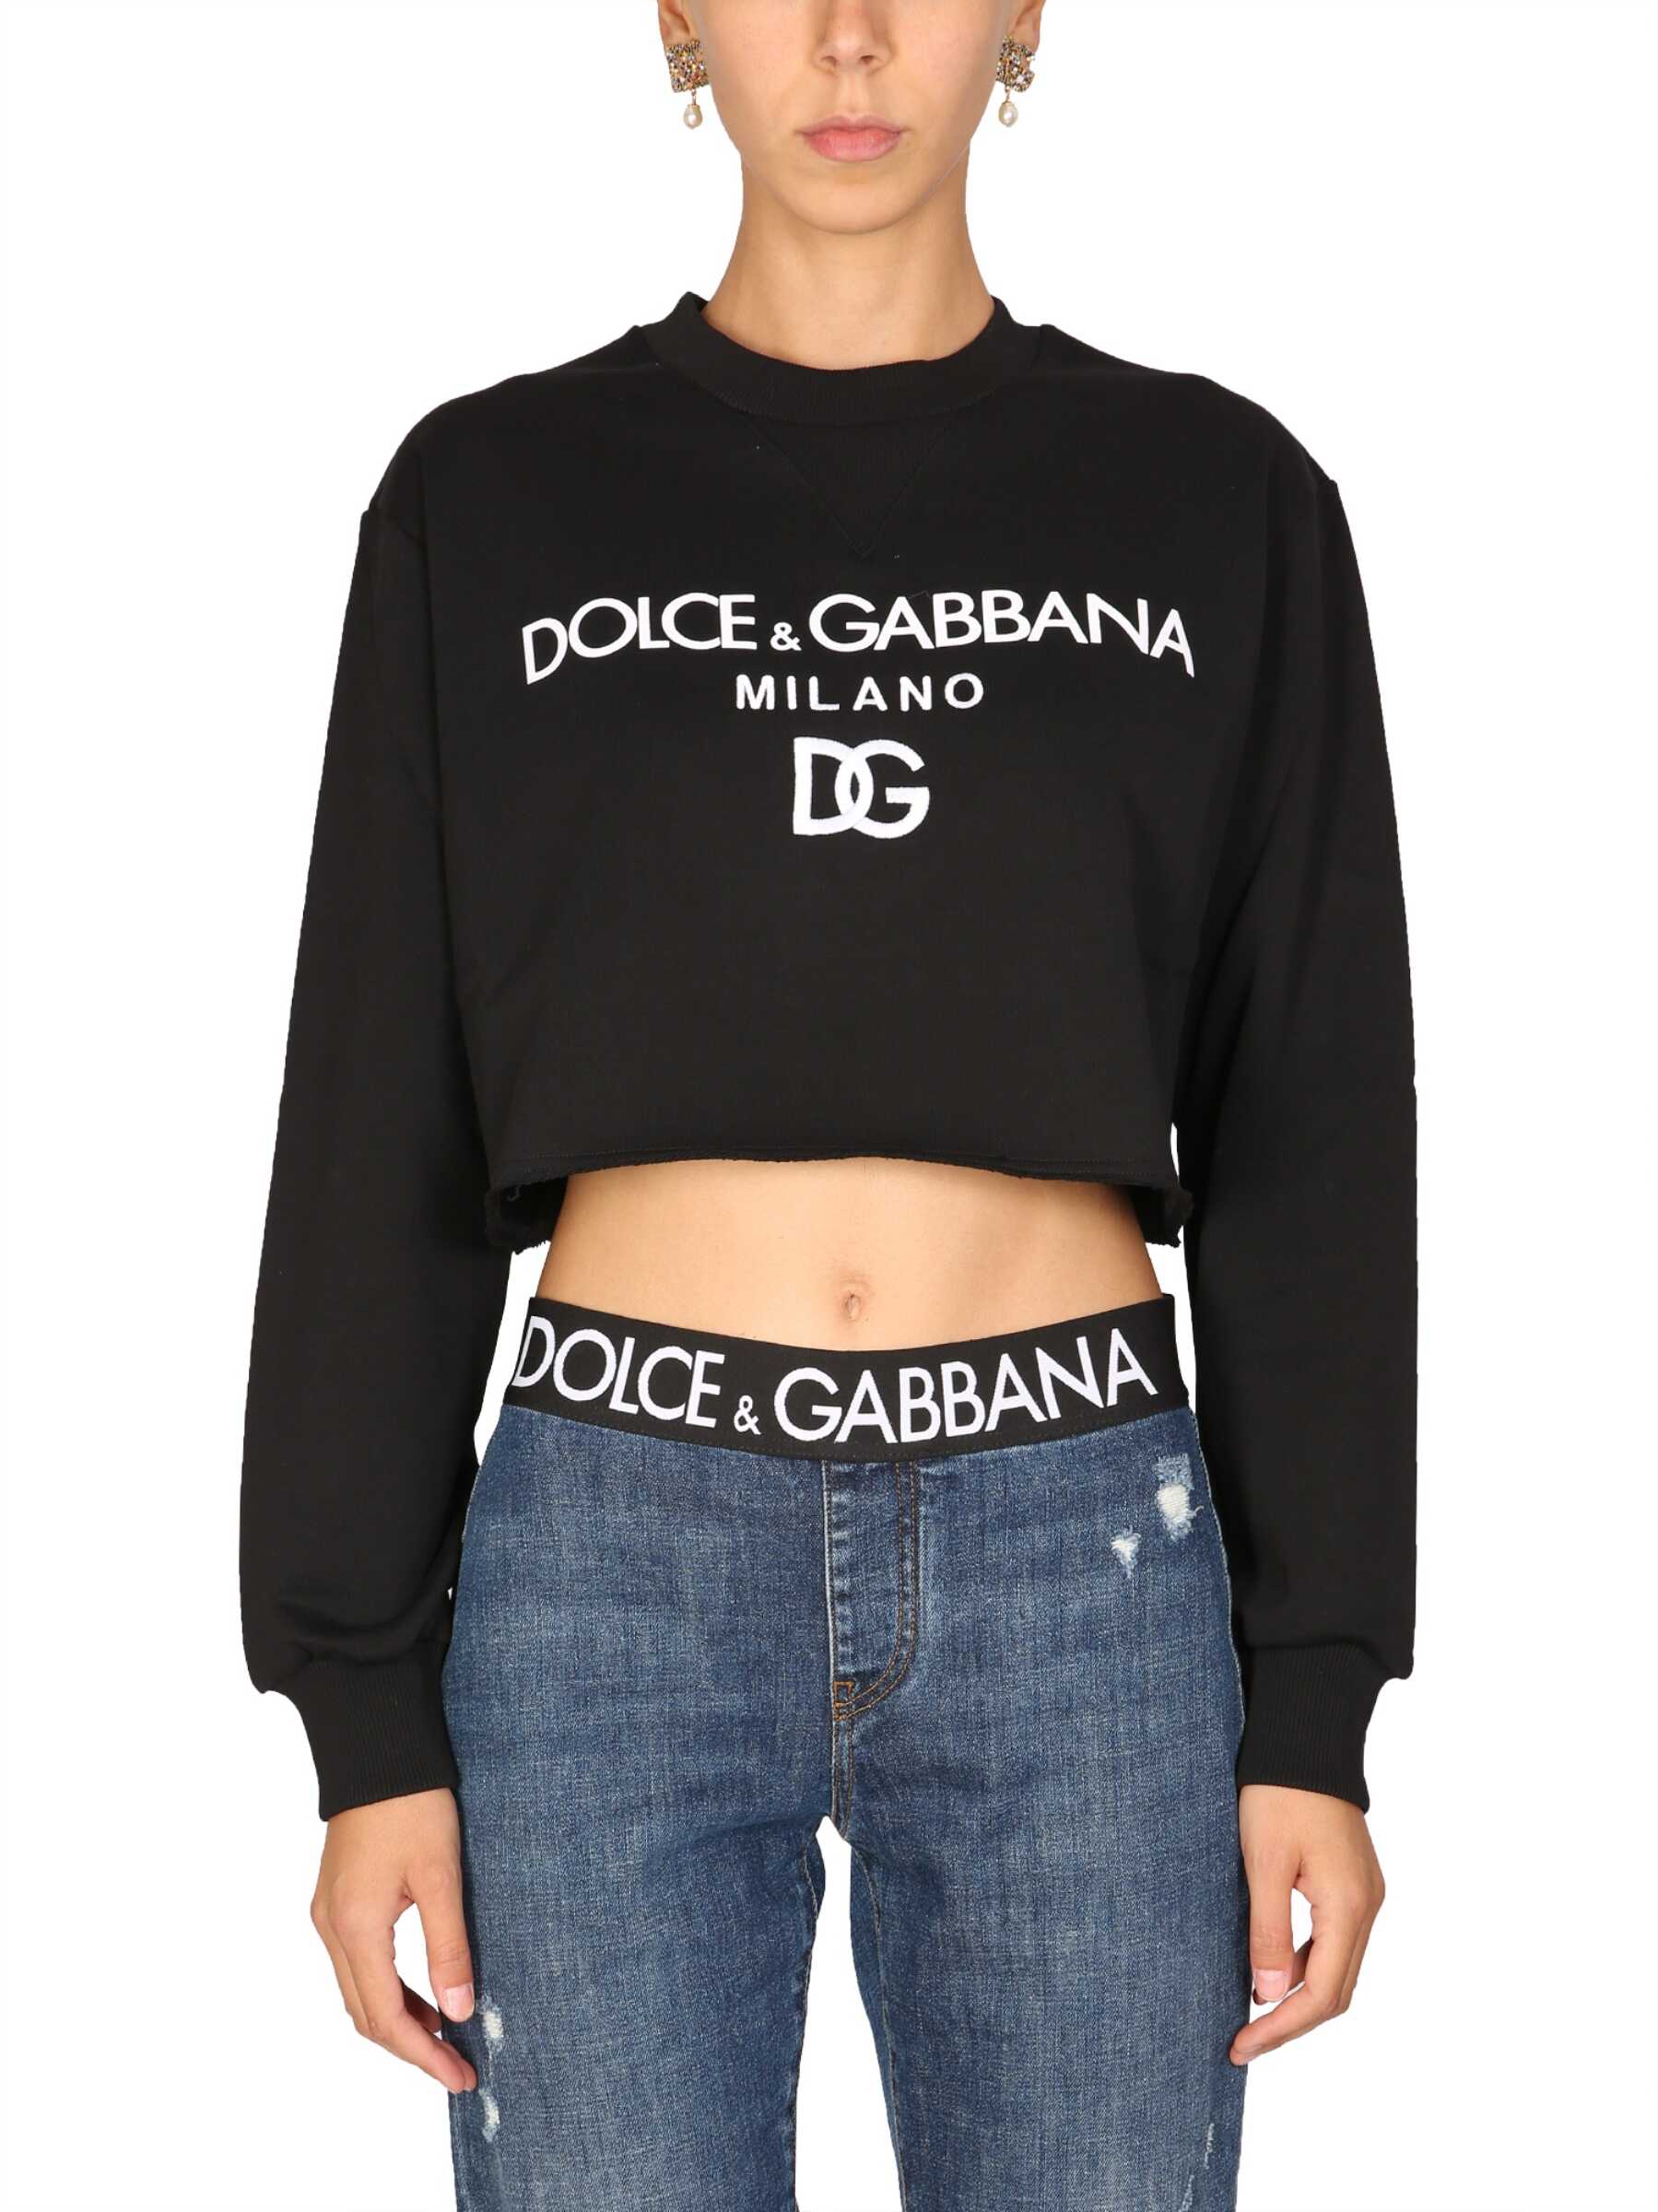 Dolce & Gabbana Dolce & Gabbana Print Sweatshirt BLACK image